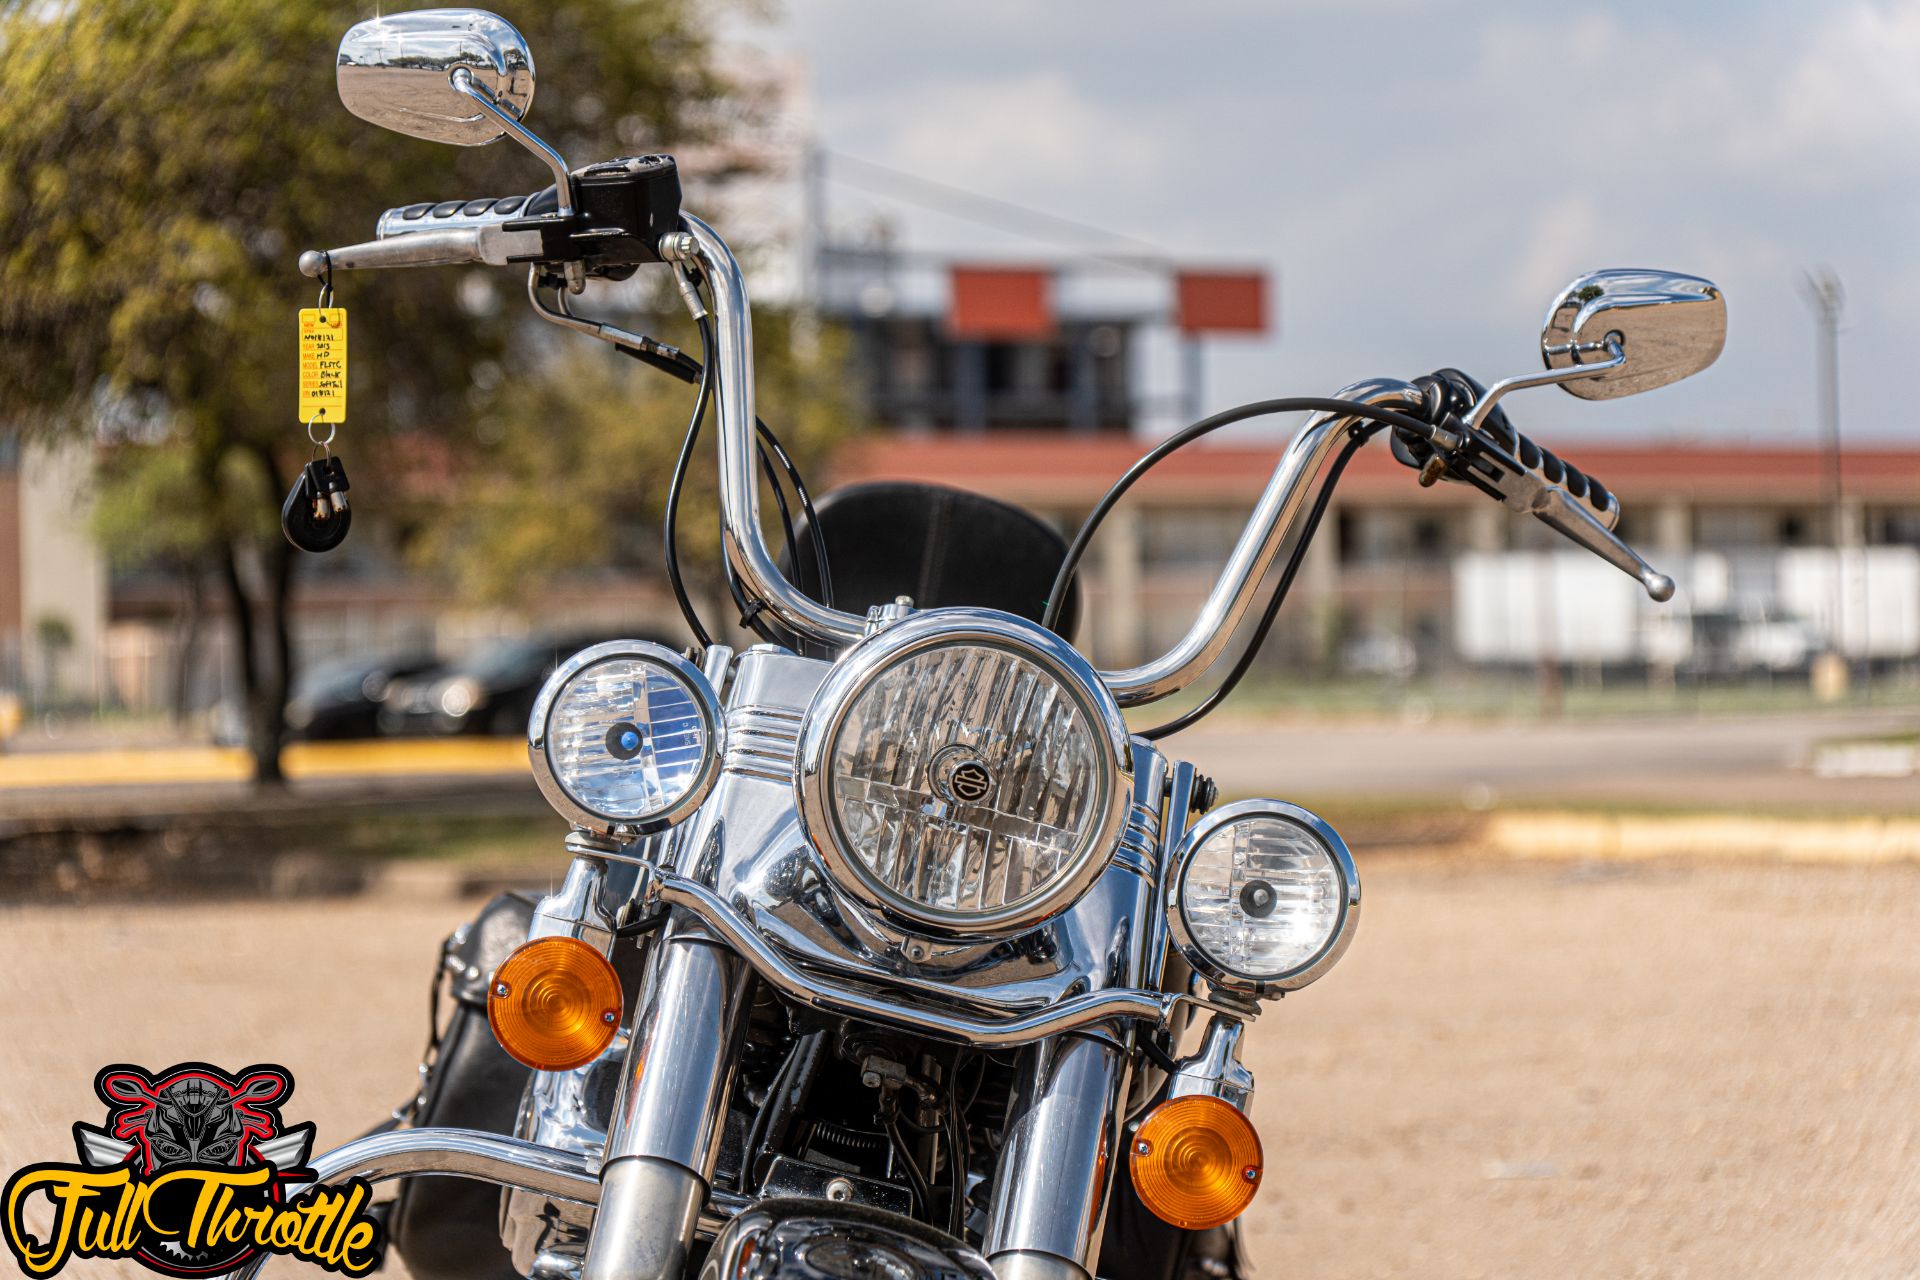 2013 Harley-Davidson Heritage Softail® Classic in Houston, Texas - Photo 9